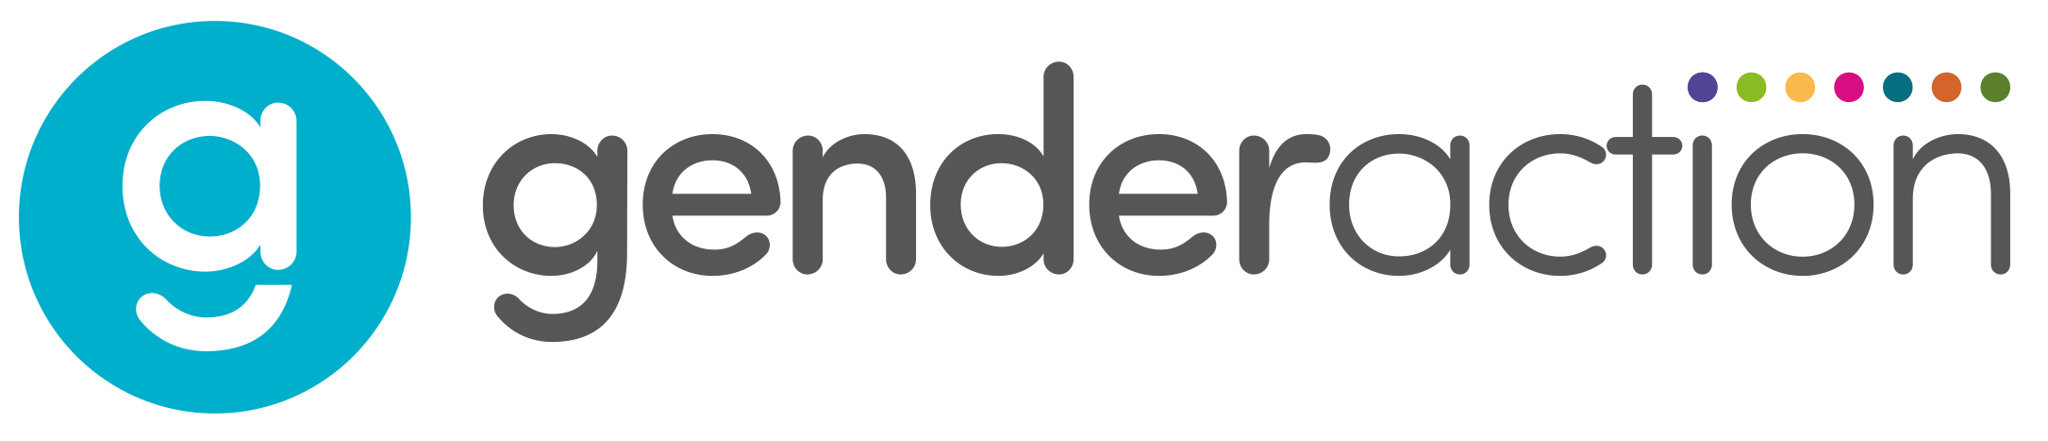 Gendear action logo